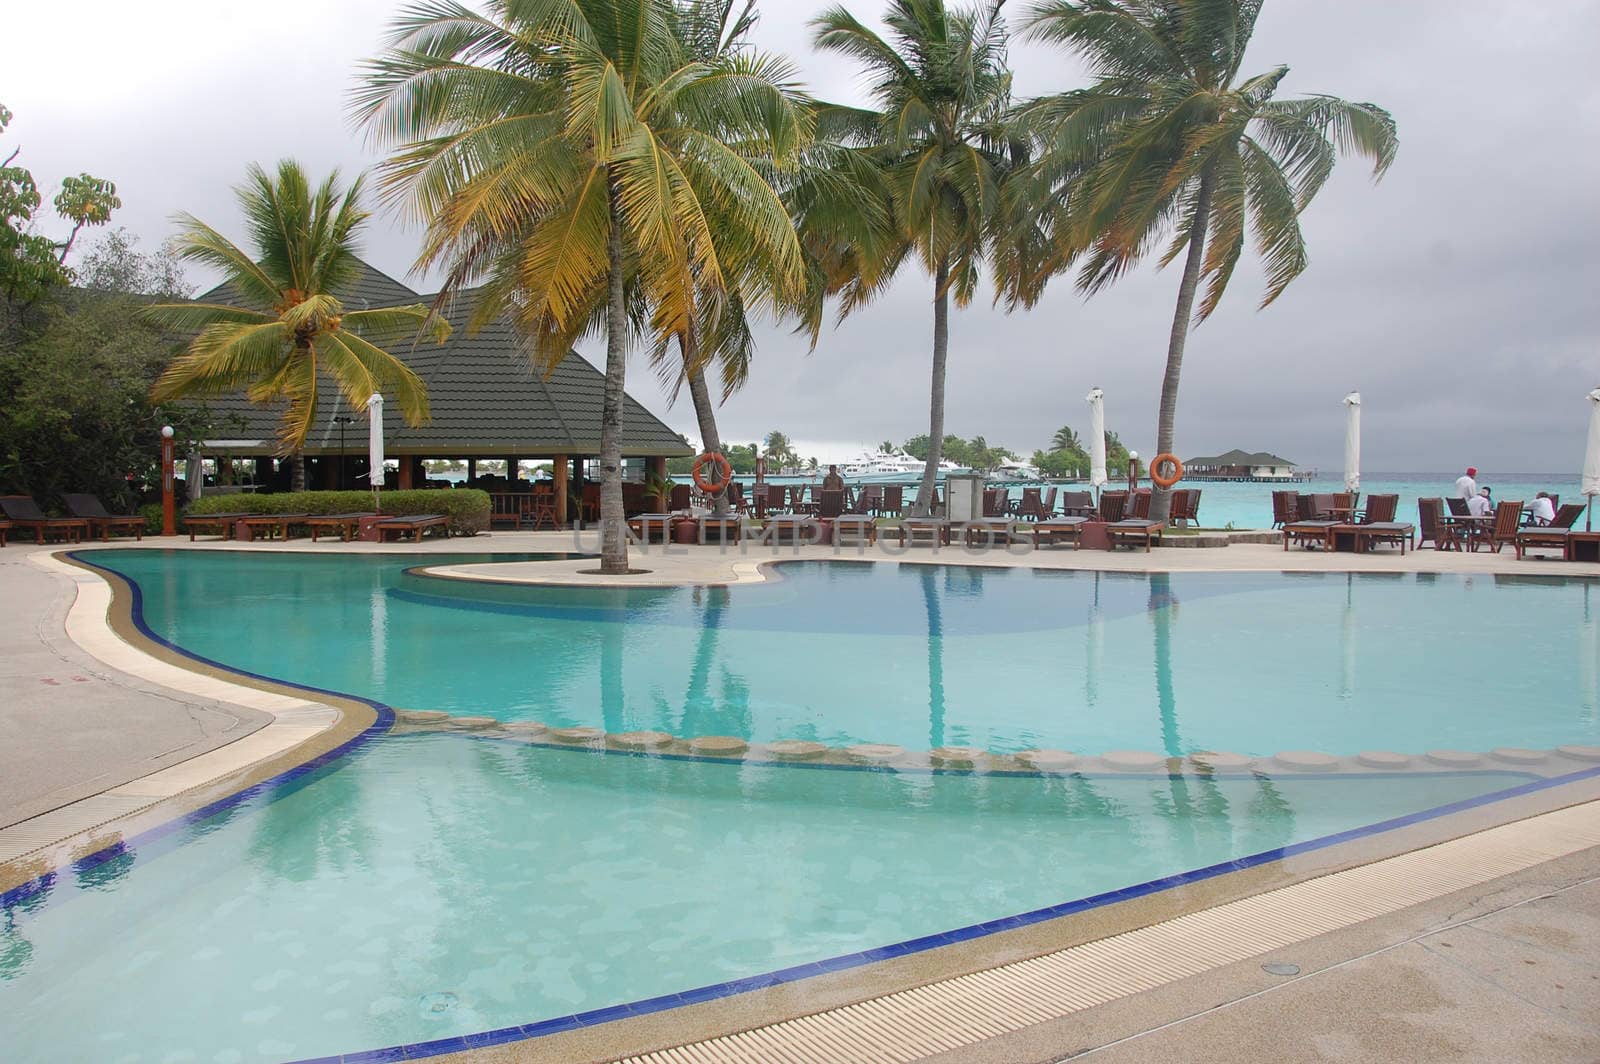 Hotel waterpool at Maldives resort by danemo